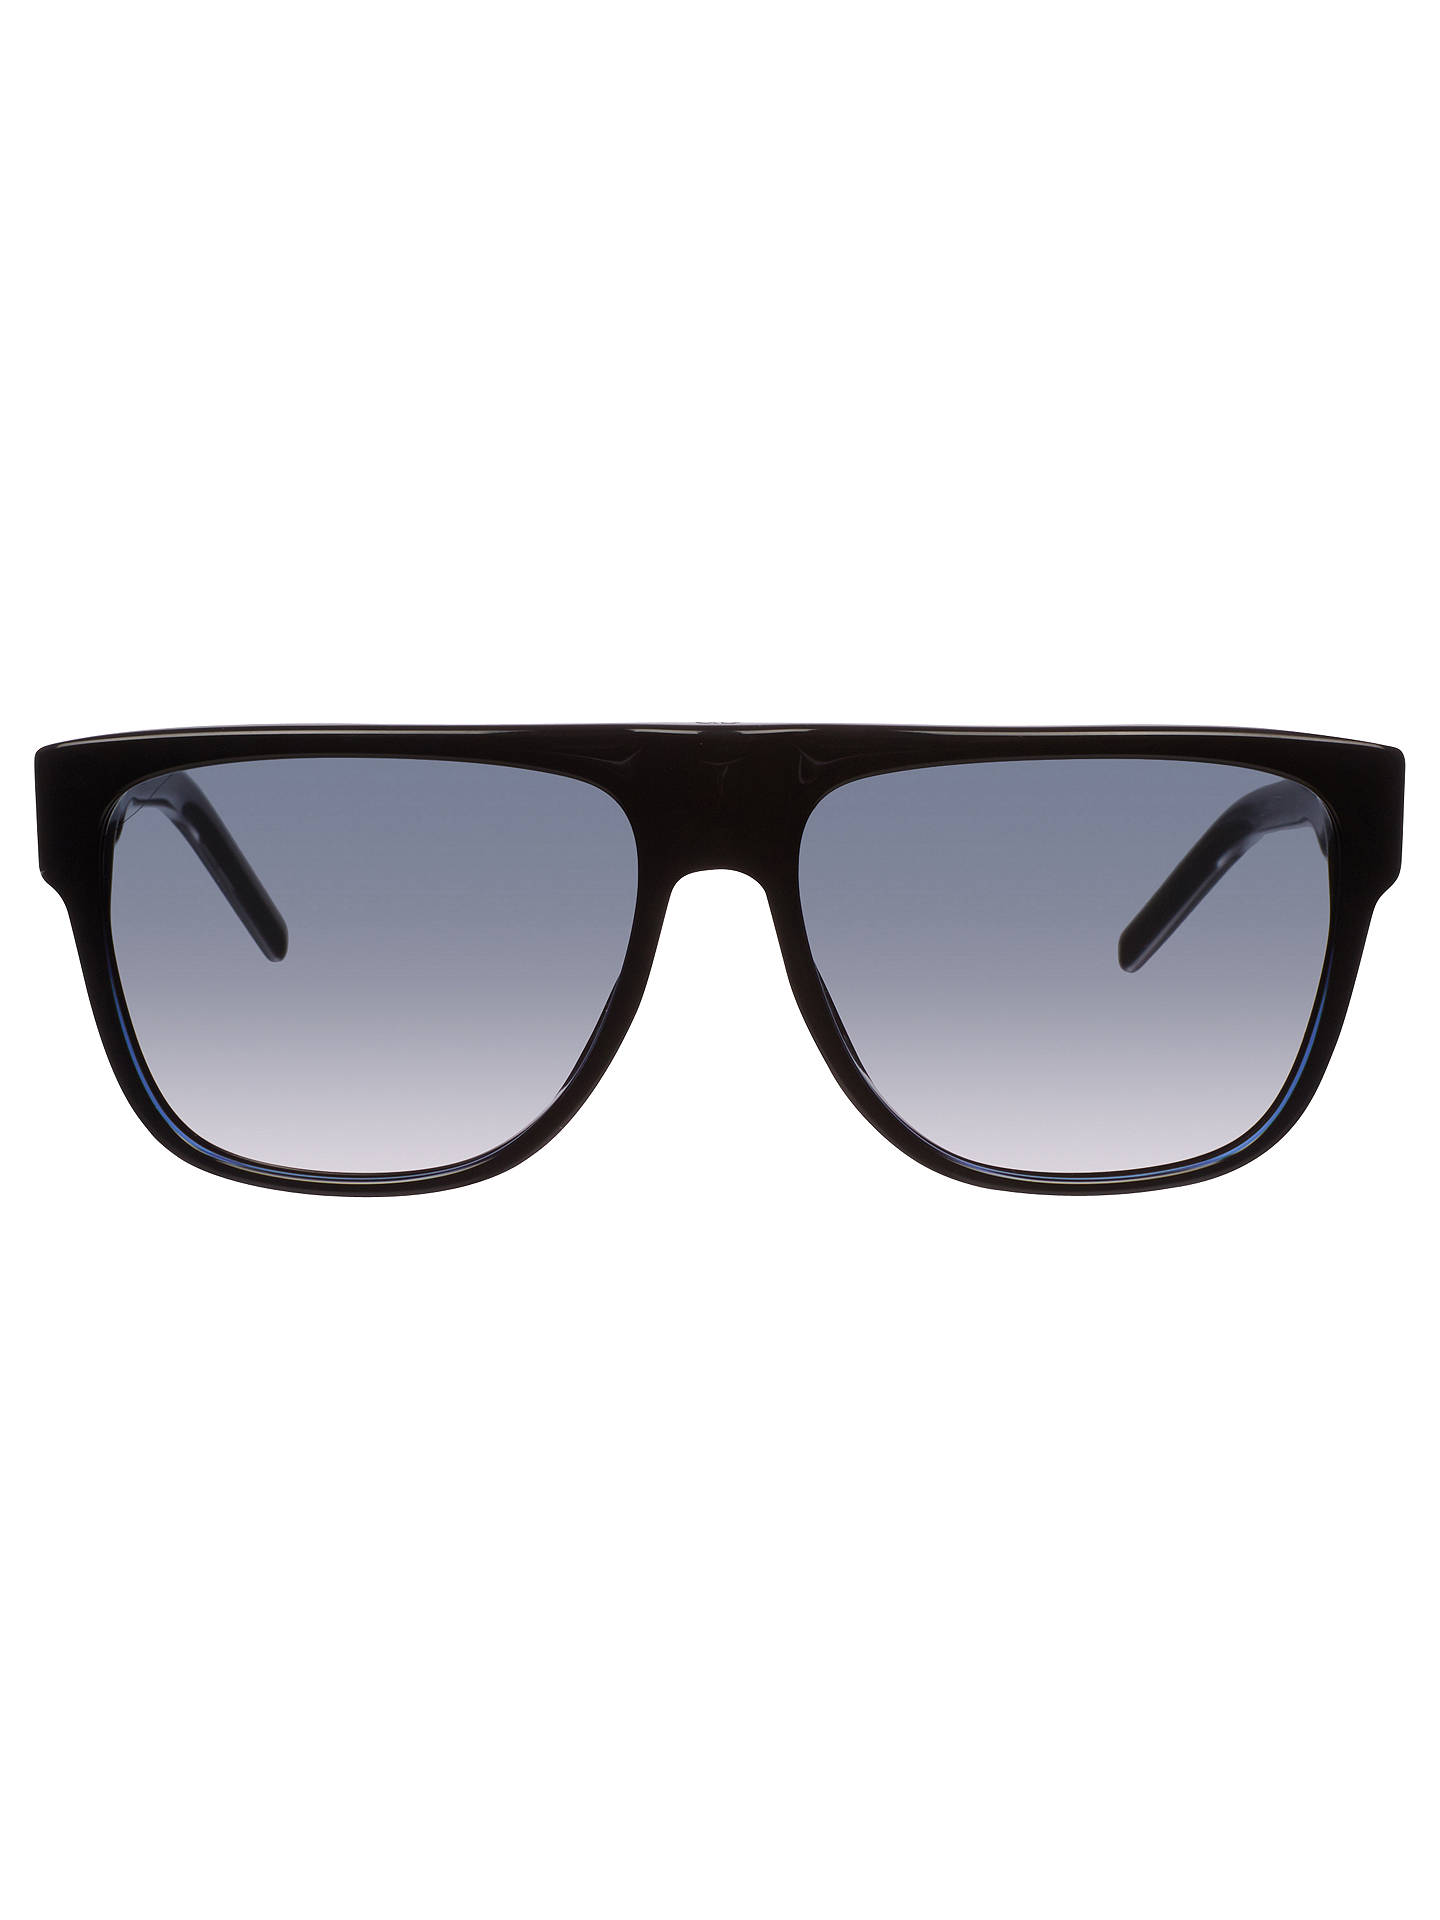 Christian Dior Black Tie 188s Square Sunglasses at John Lewis & Partners